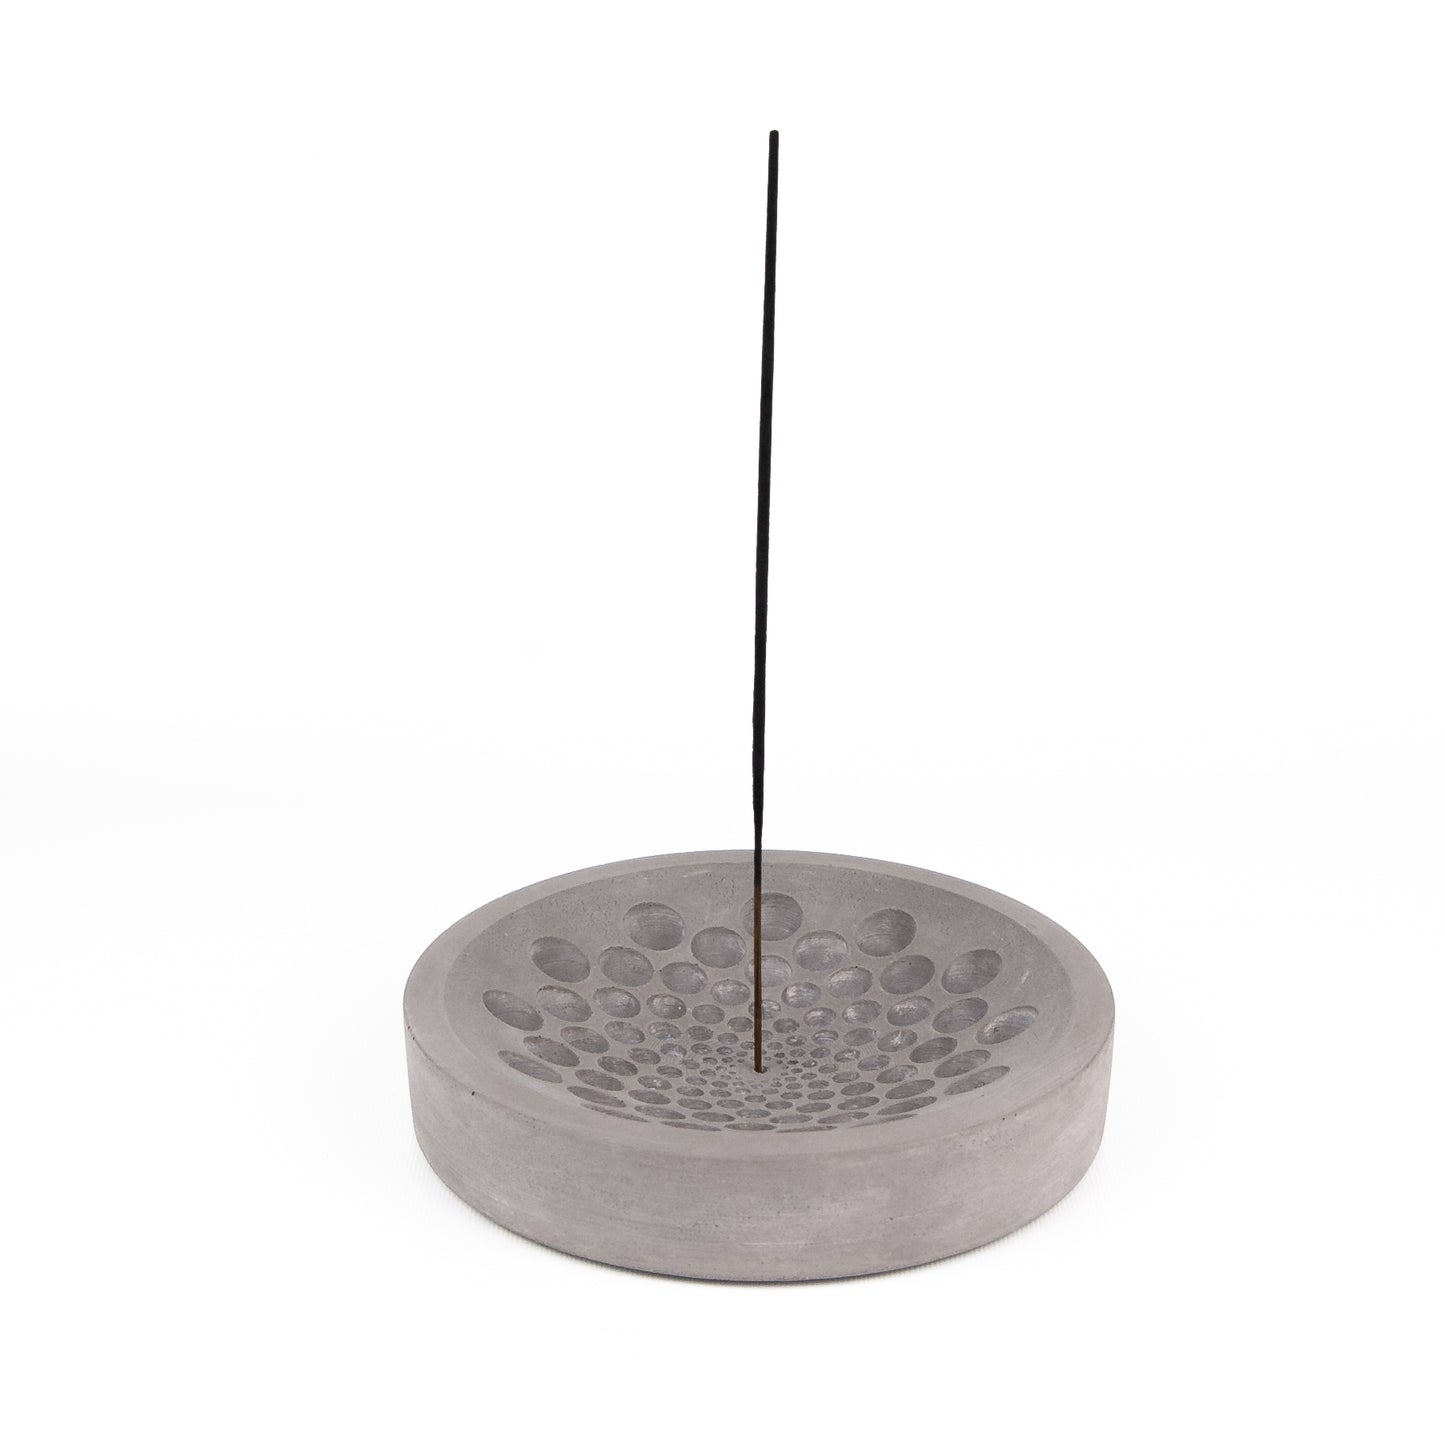 MANDALA 1 Taupe grey incense holder